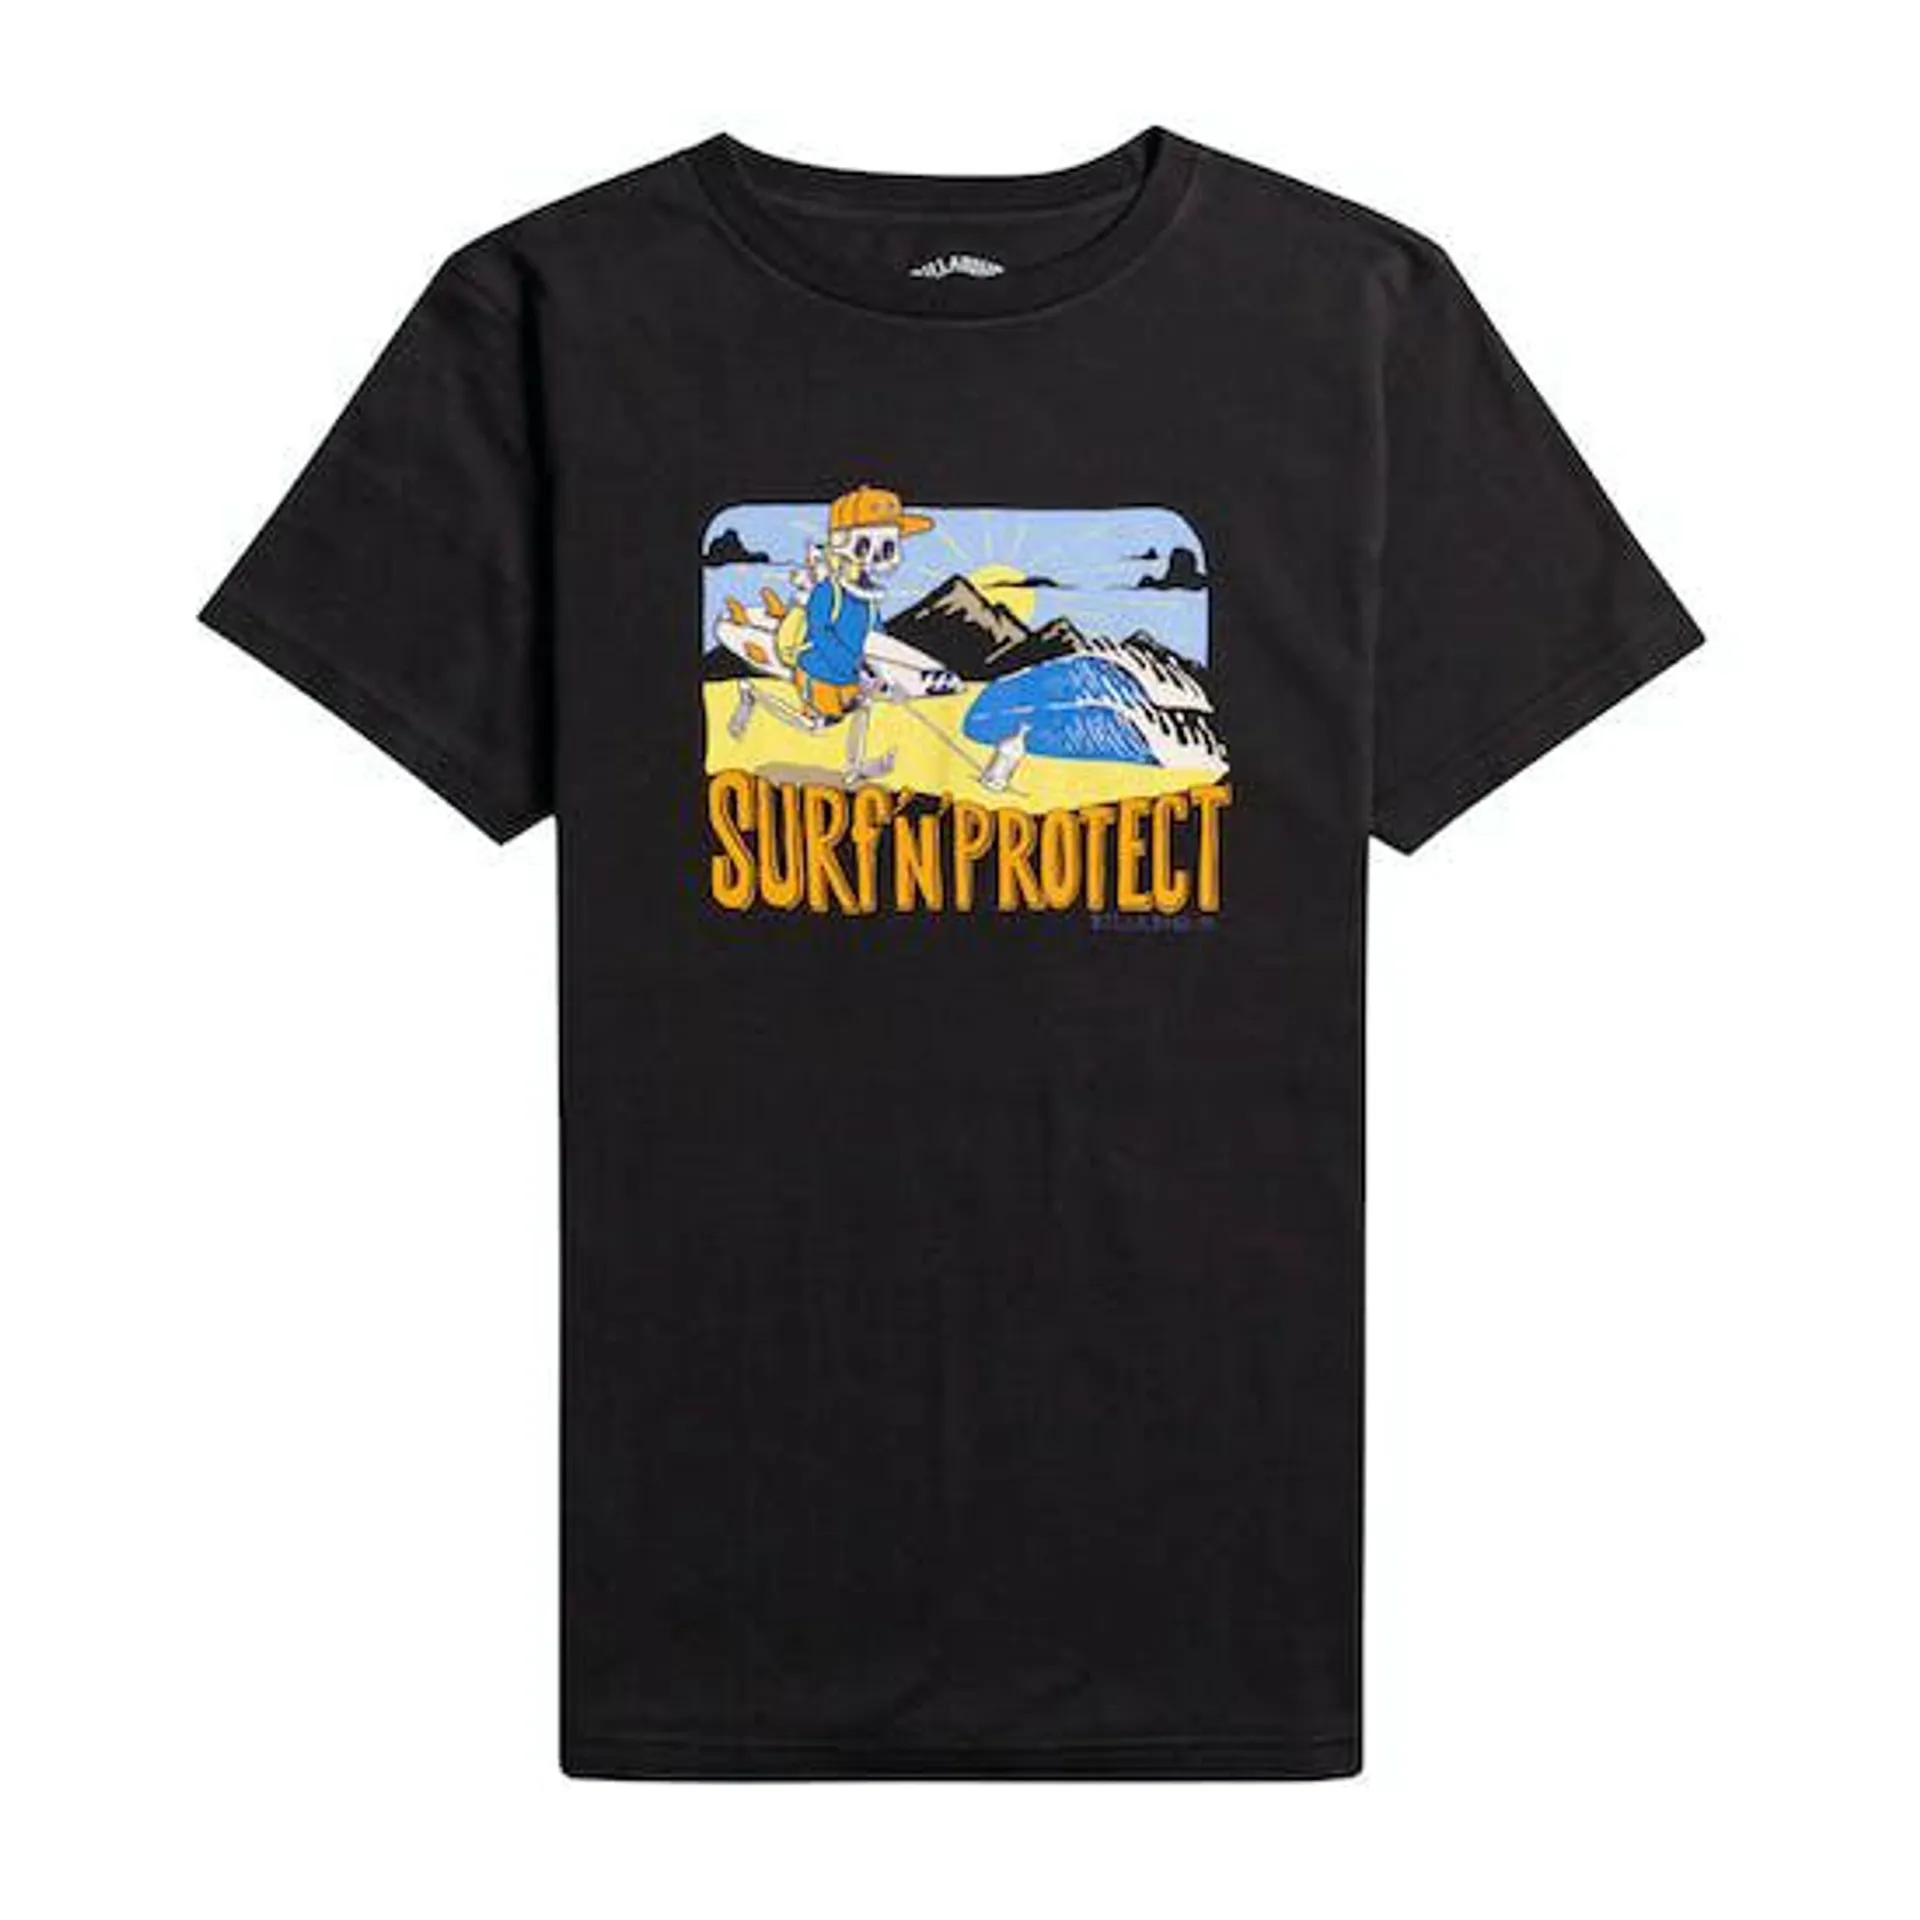 Billabong Surf N Protect Boys Short Sleeve T-Shirt